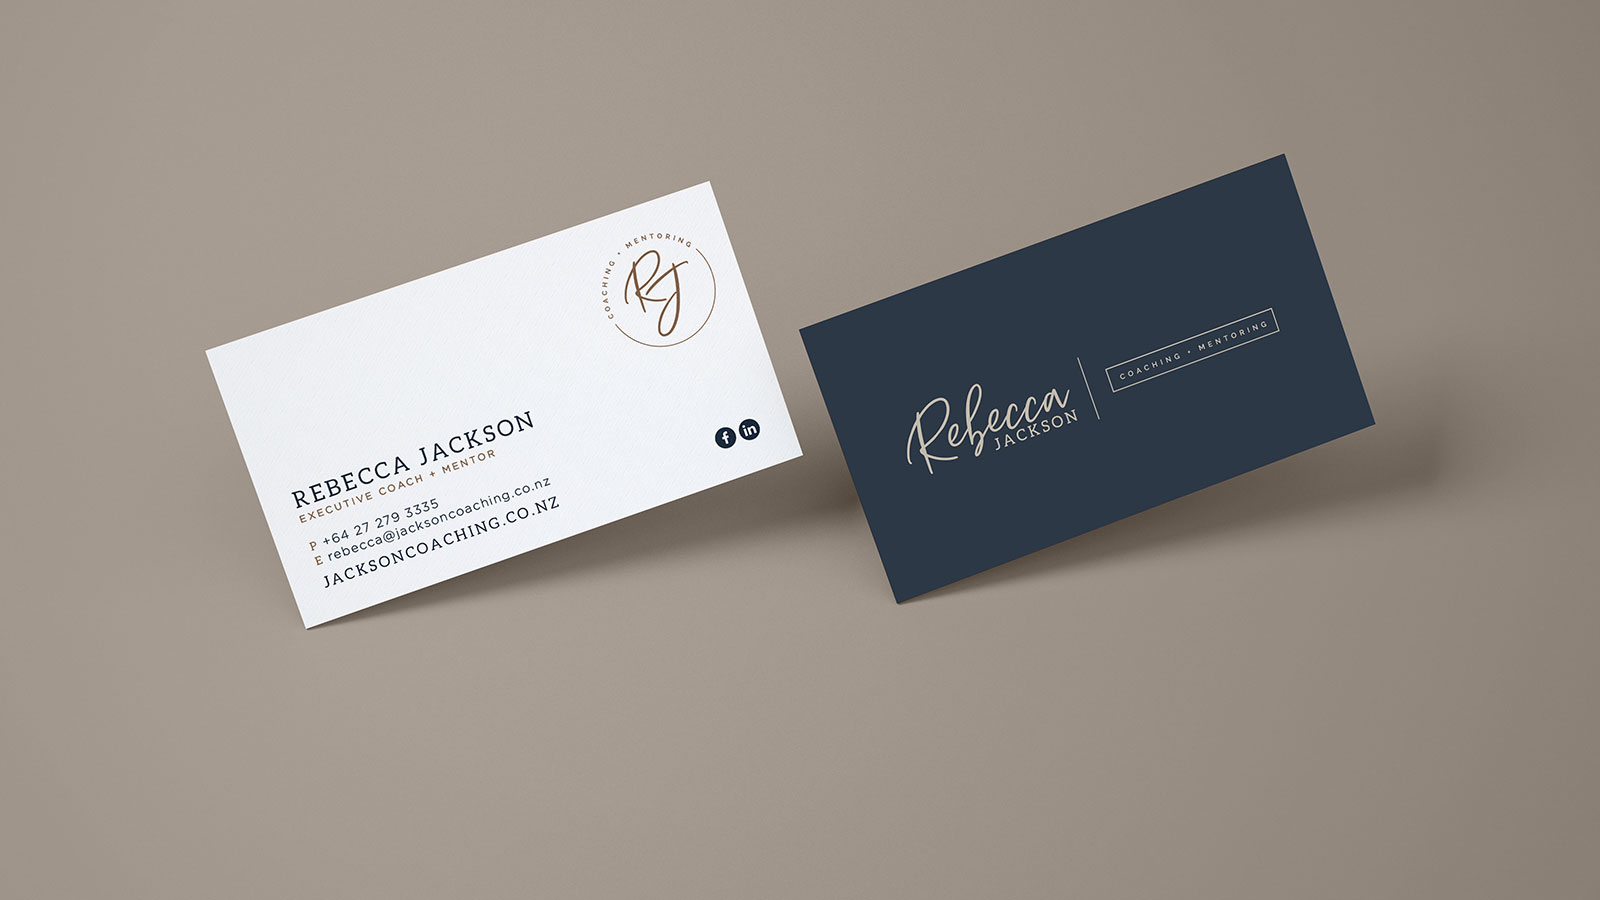 Business Card Design Hamilton - Rebecca Jackson